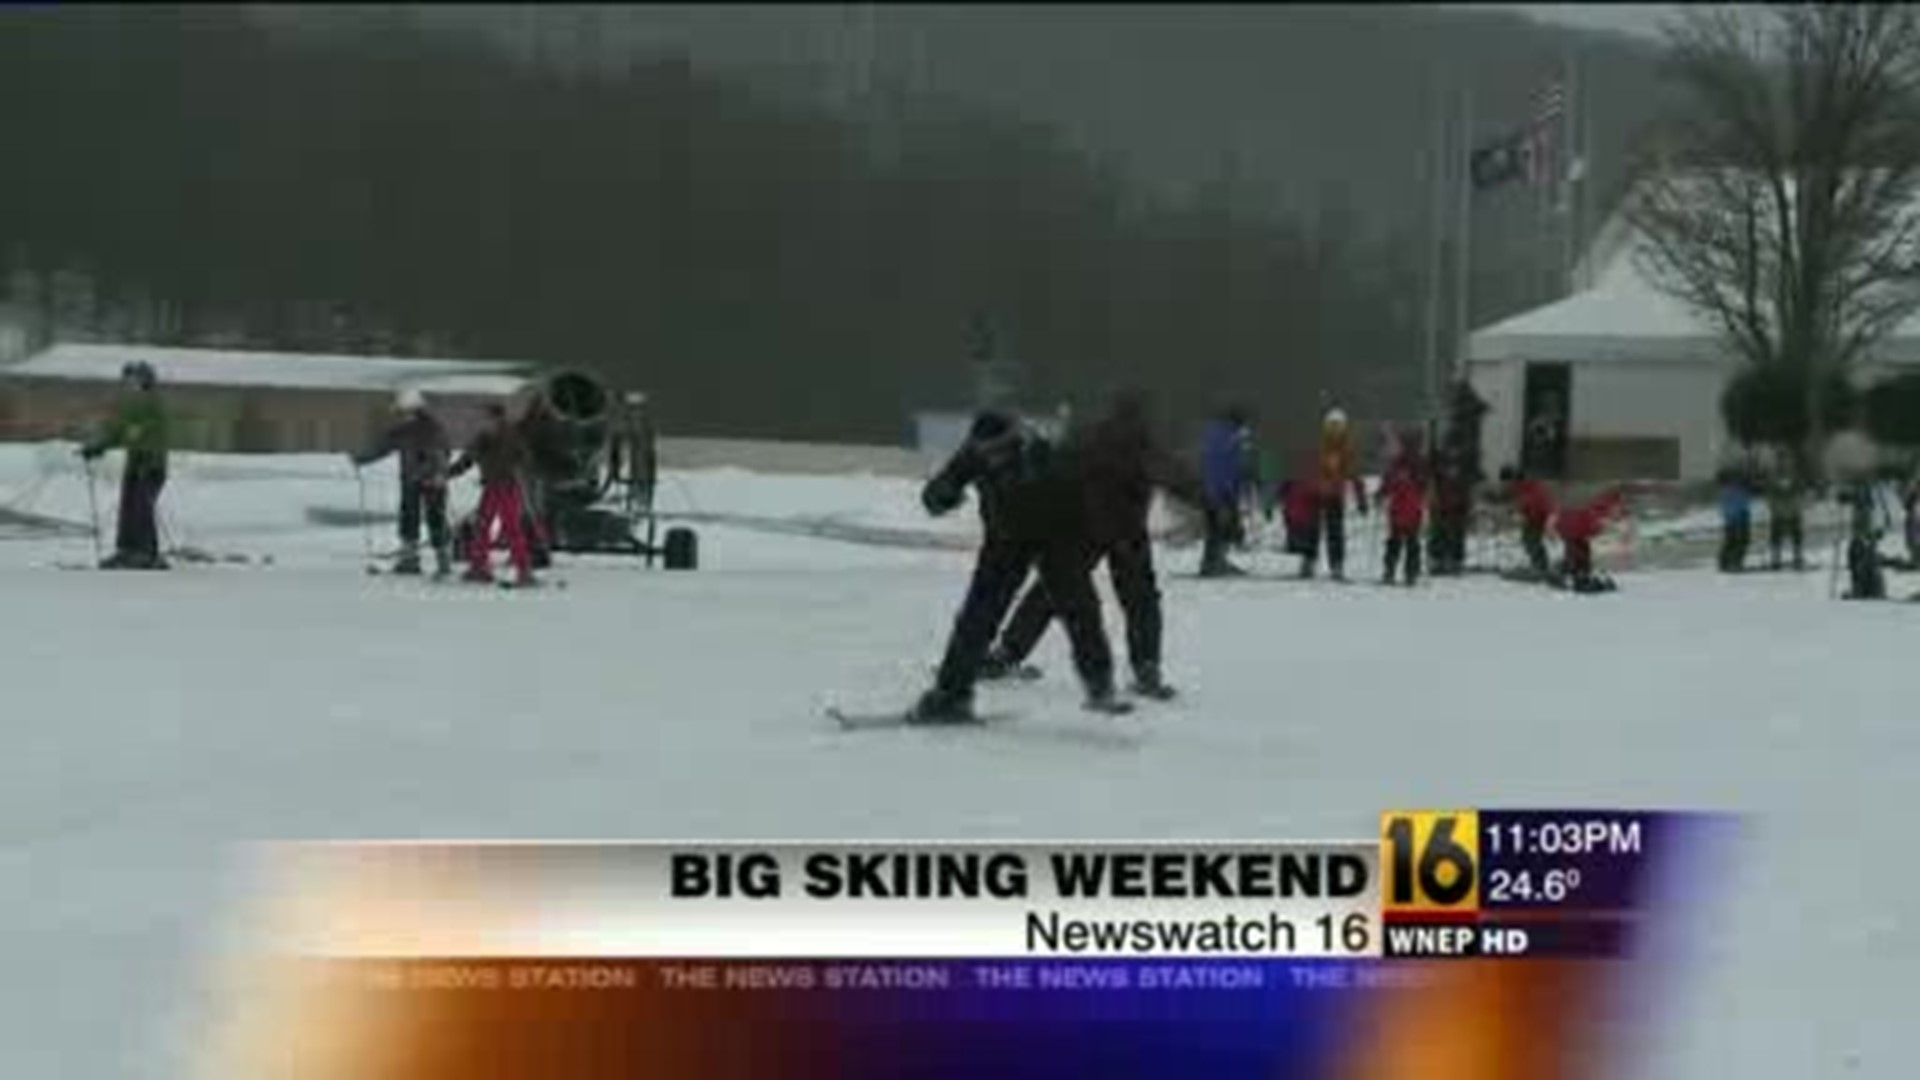 Big Skiing Weekend